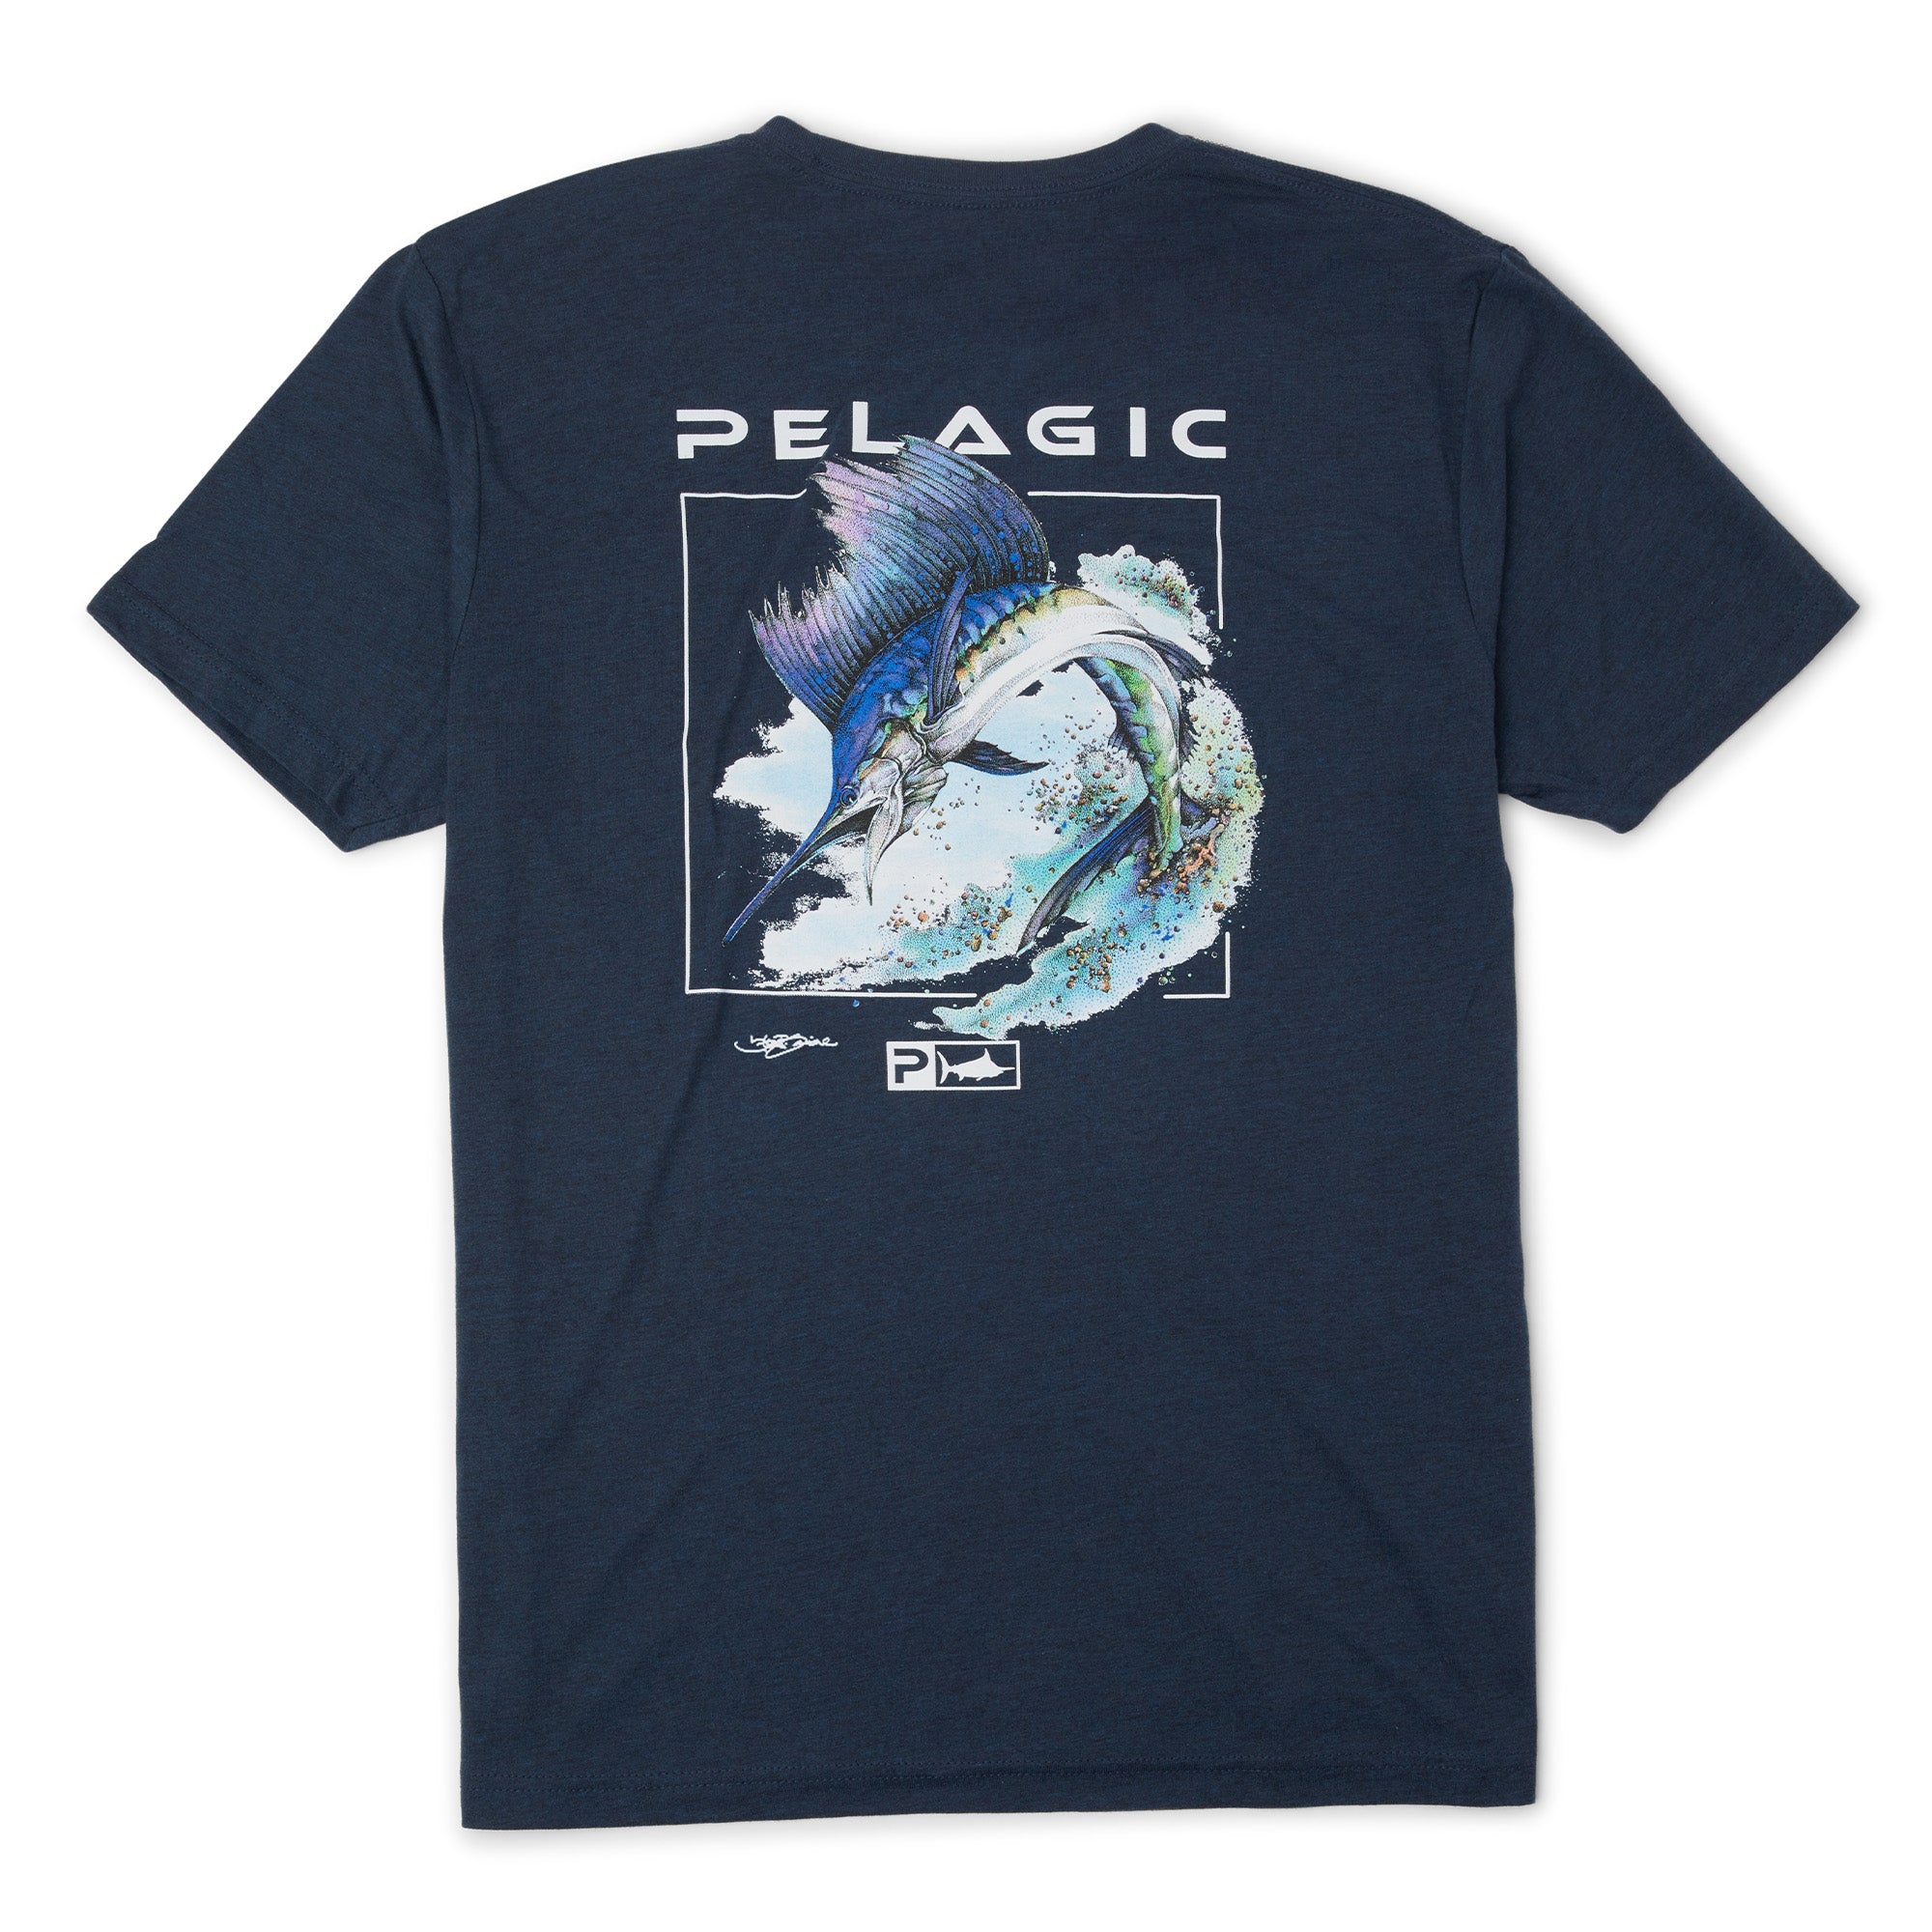 Pelagic High Performance Offshore Fishing Gear Navy Blue T-Shirt 2